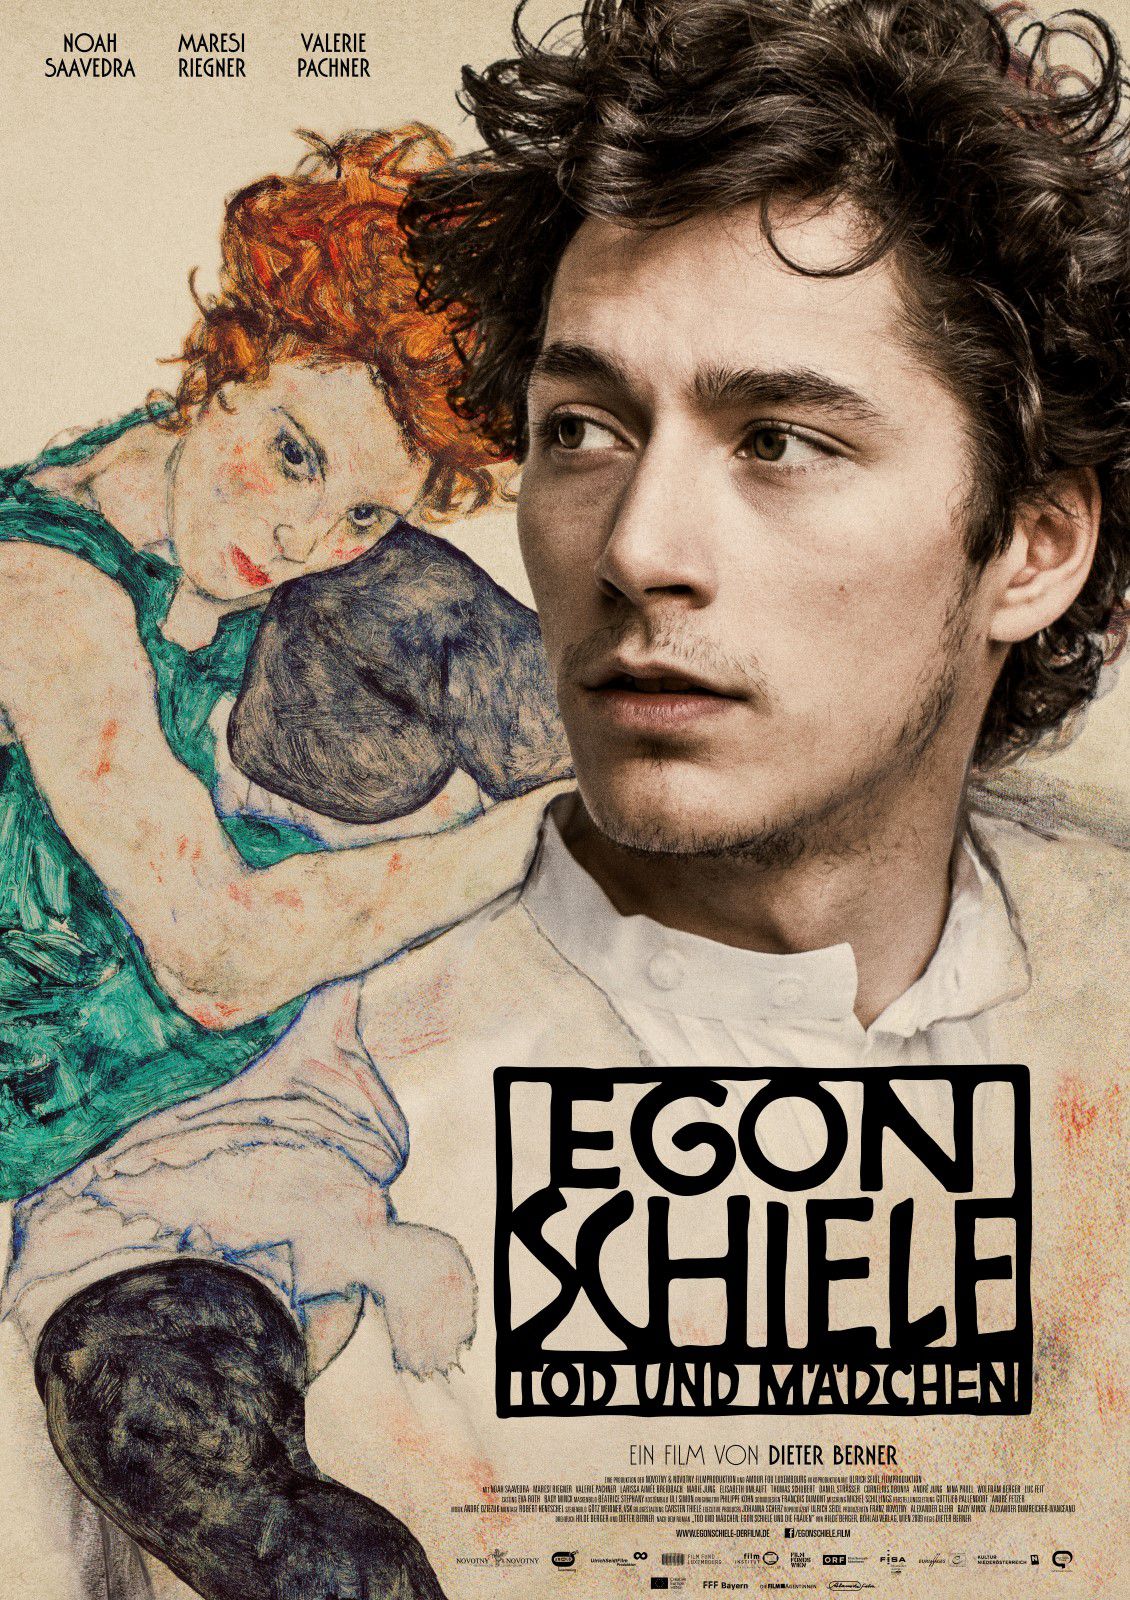 Egon Schiele - Film (2016) streaming VF gratuit complet